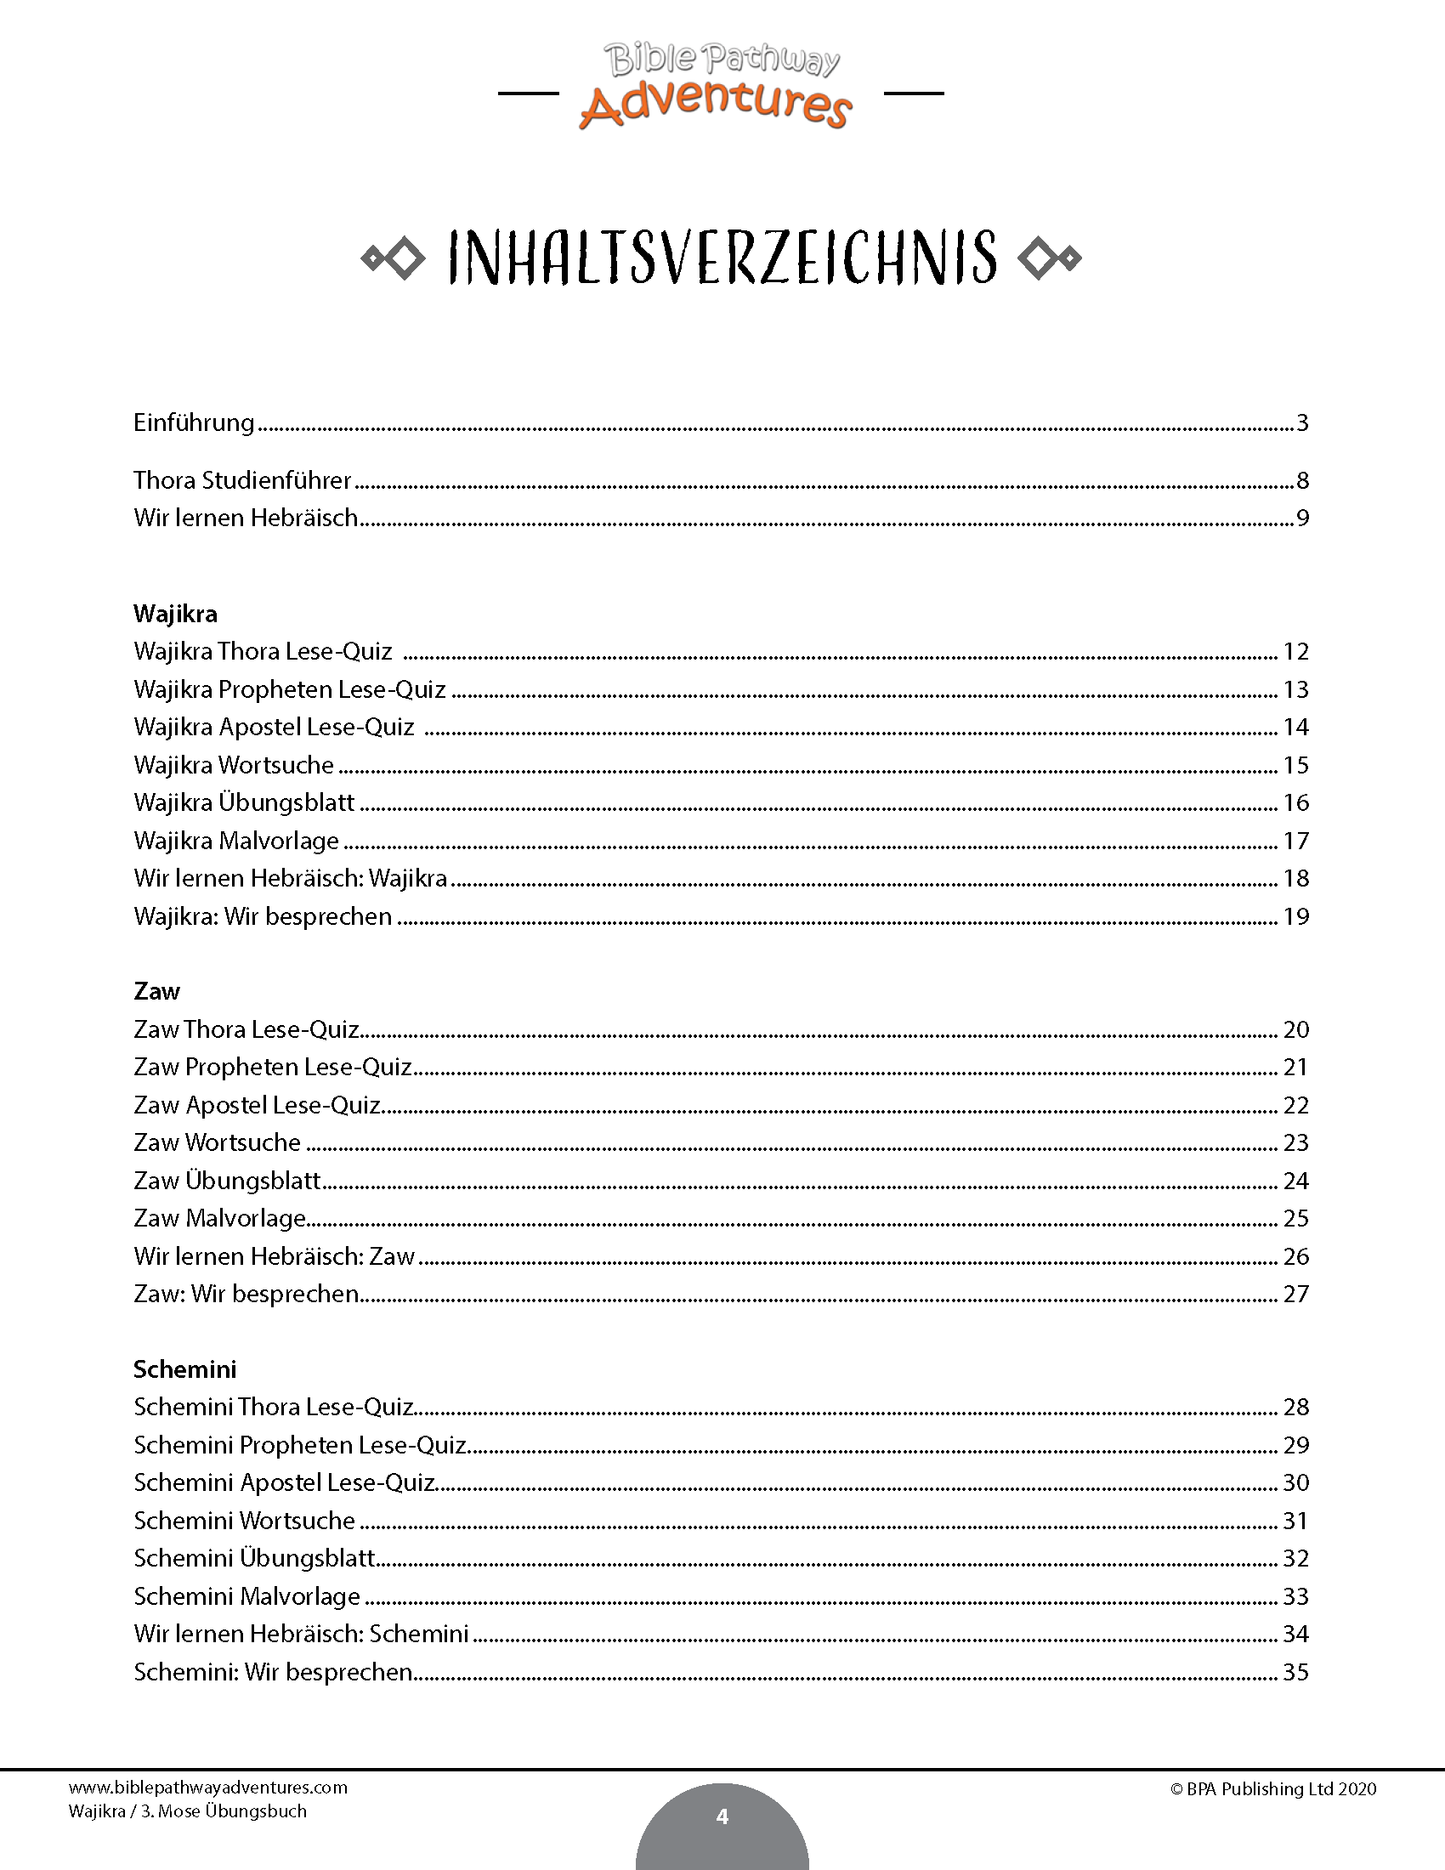 Wajikra / 3. Mose Übungsbuch (PDF)